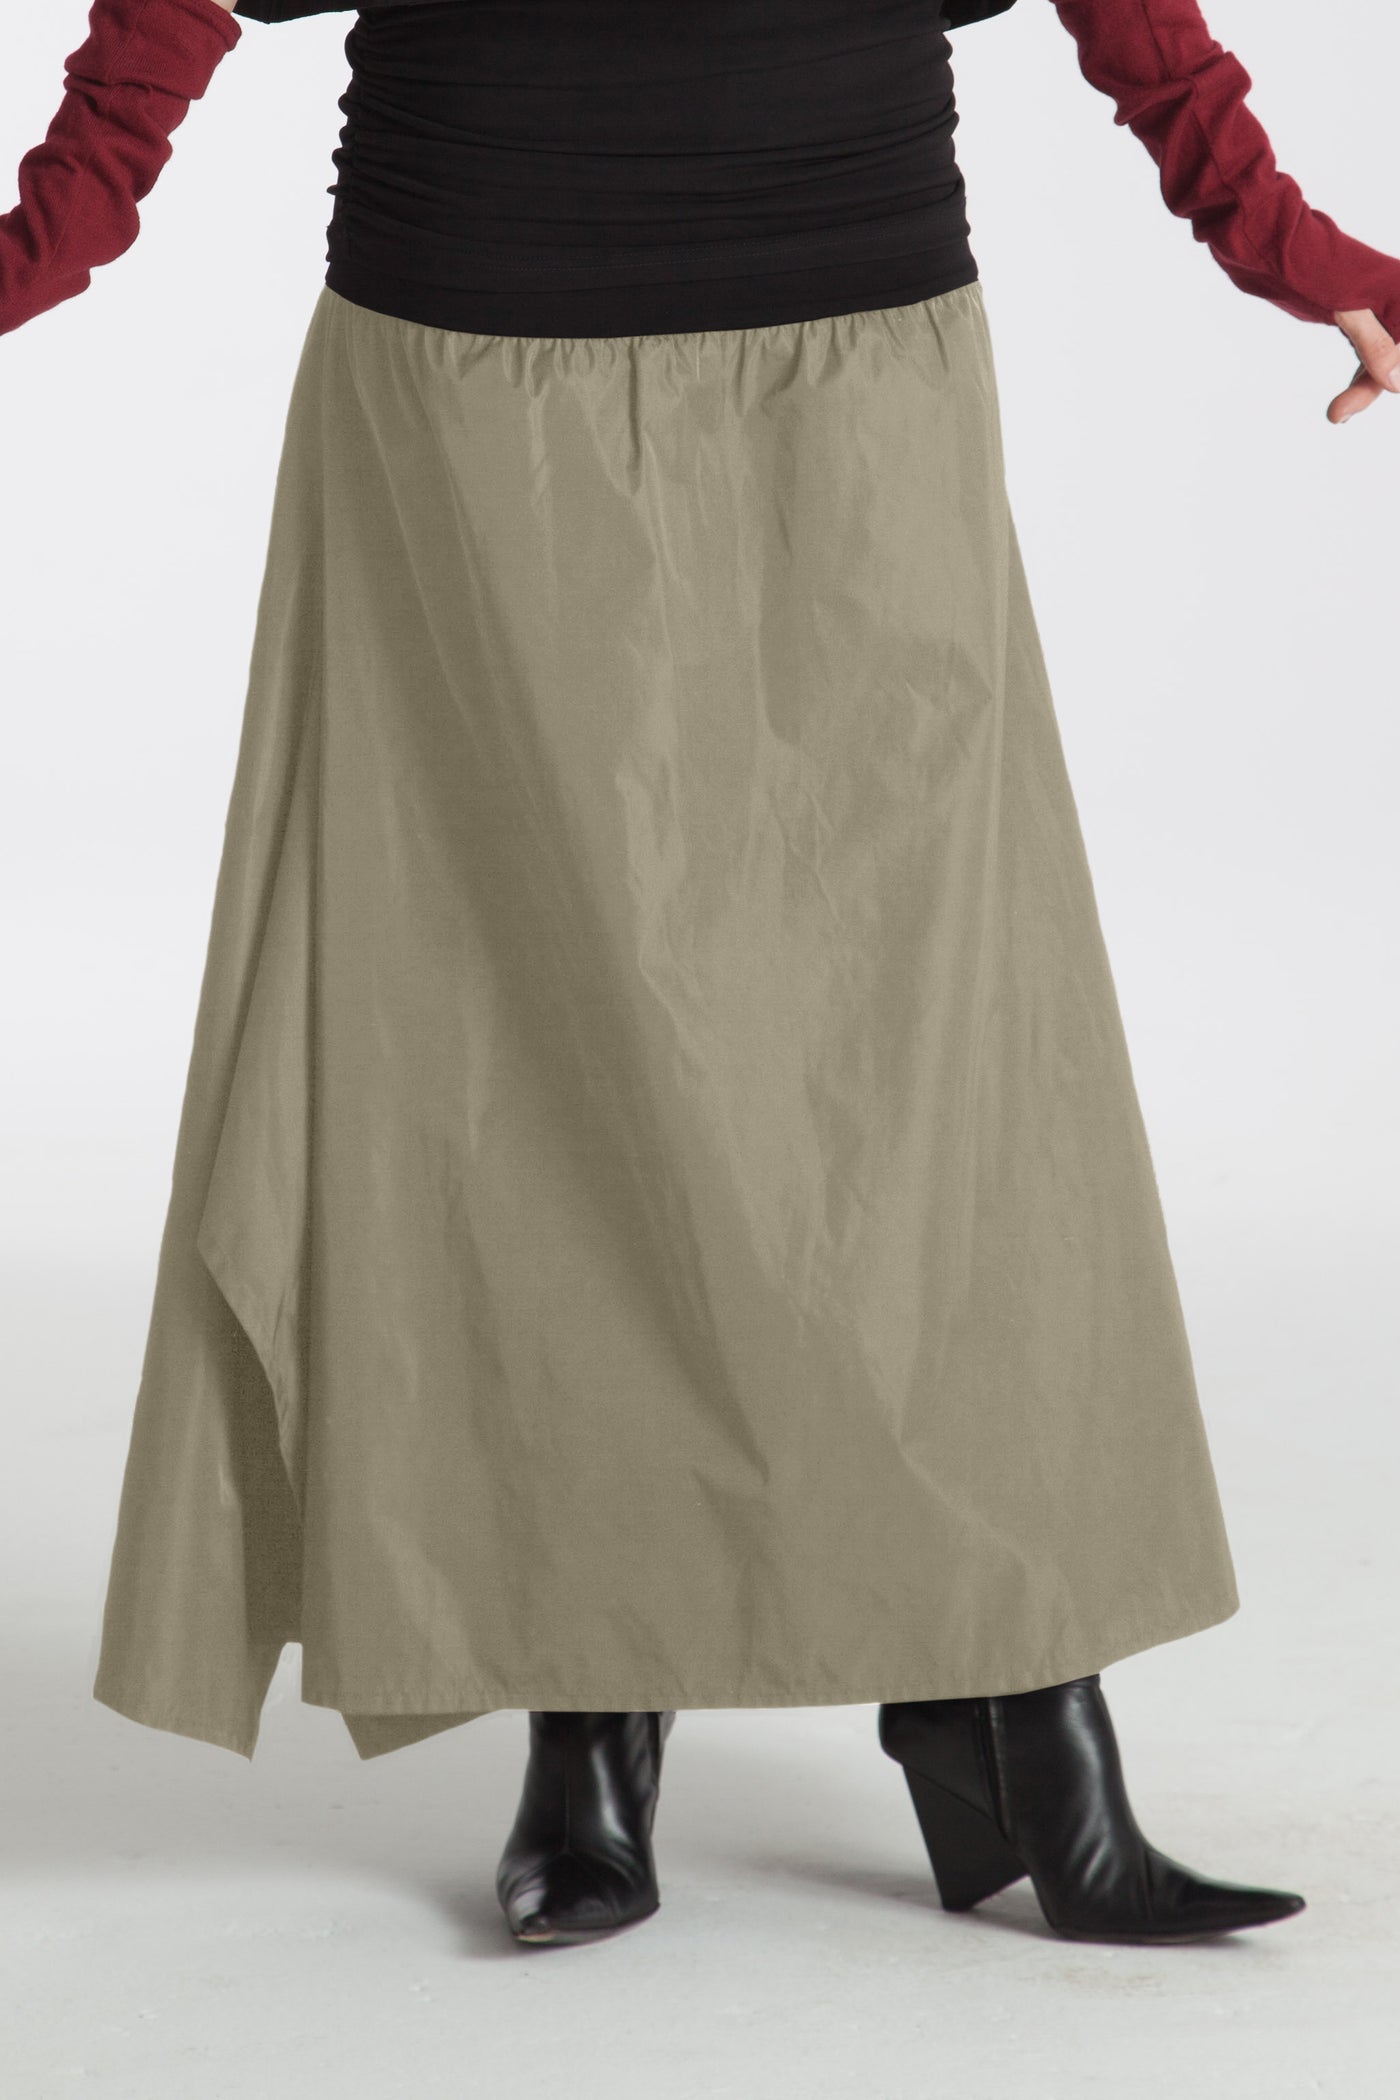 Nylon Square Skirt